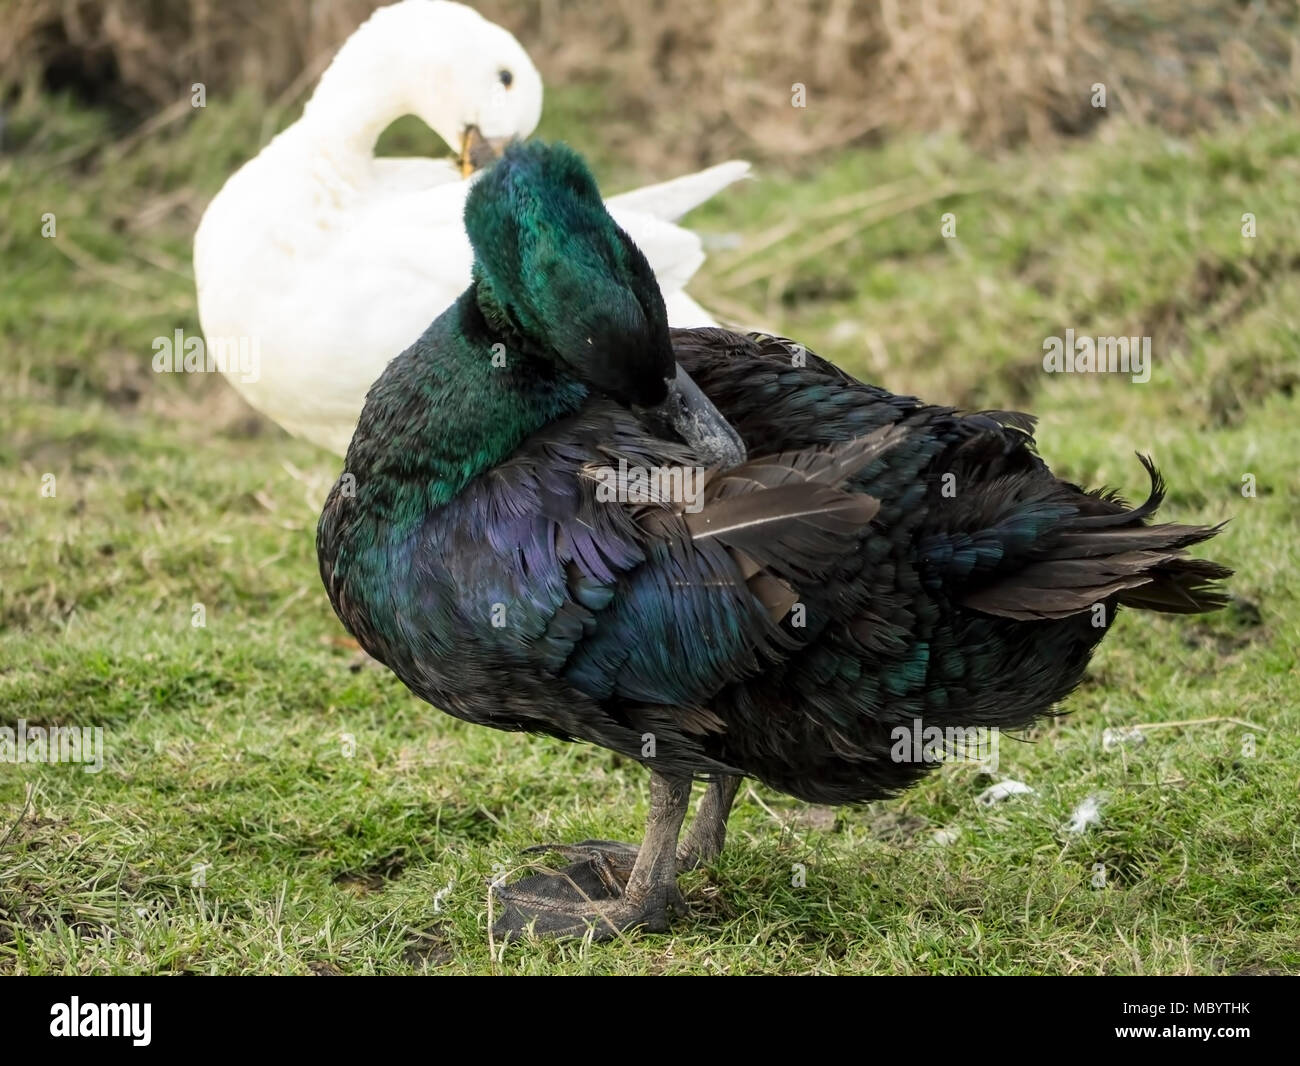 Ducks in their natural habitat Stock Photo